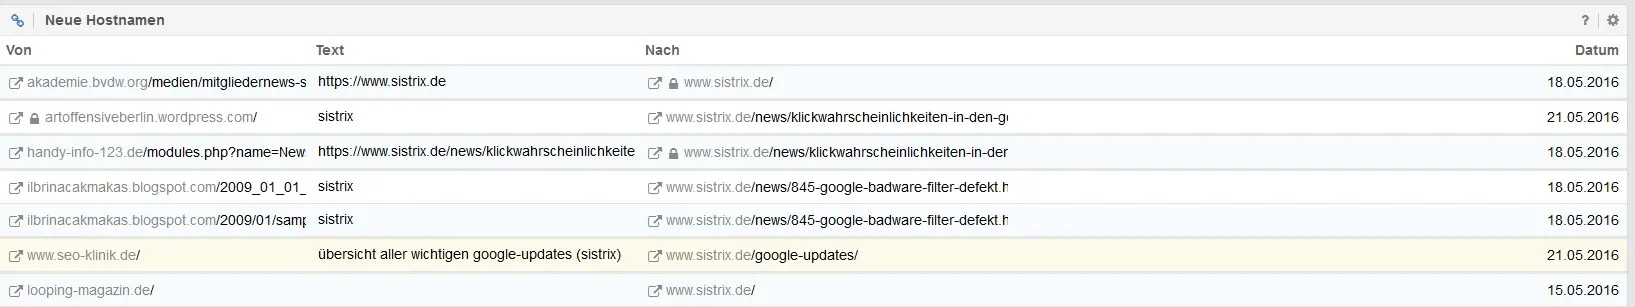 Sistrix neue Links Übersicht by seo-tech.de